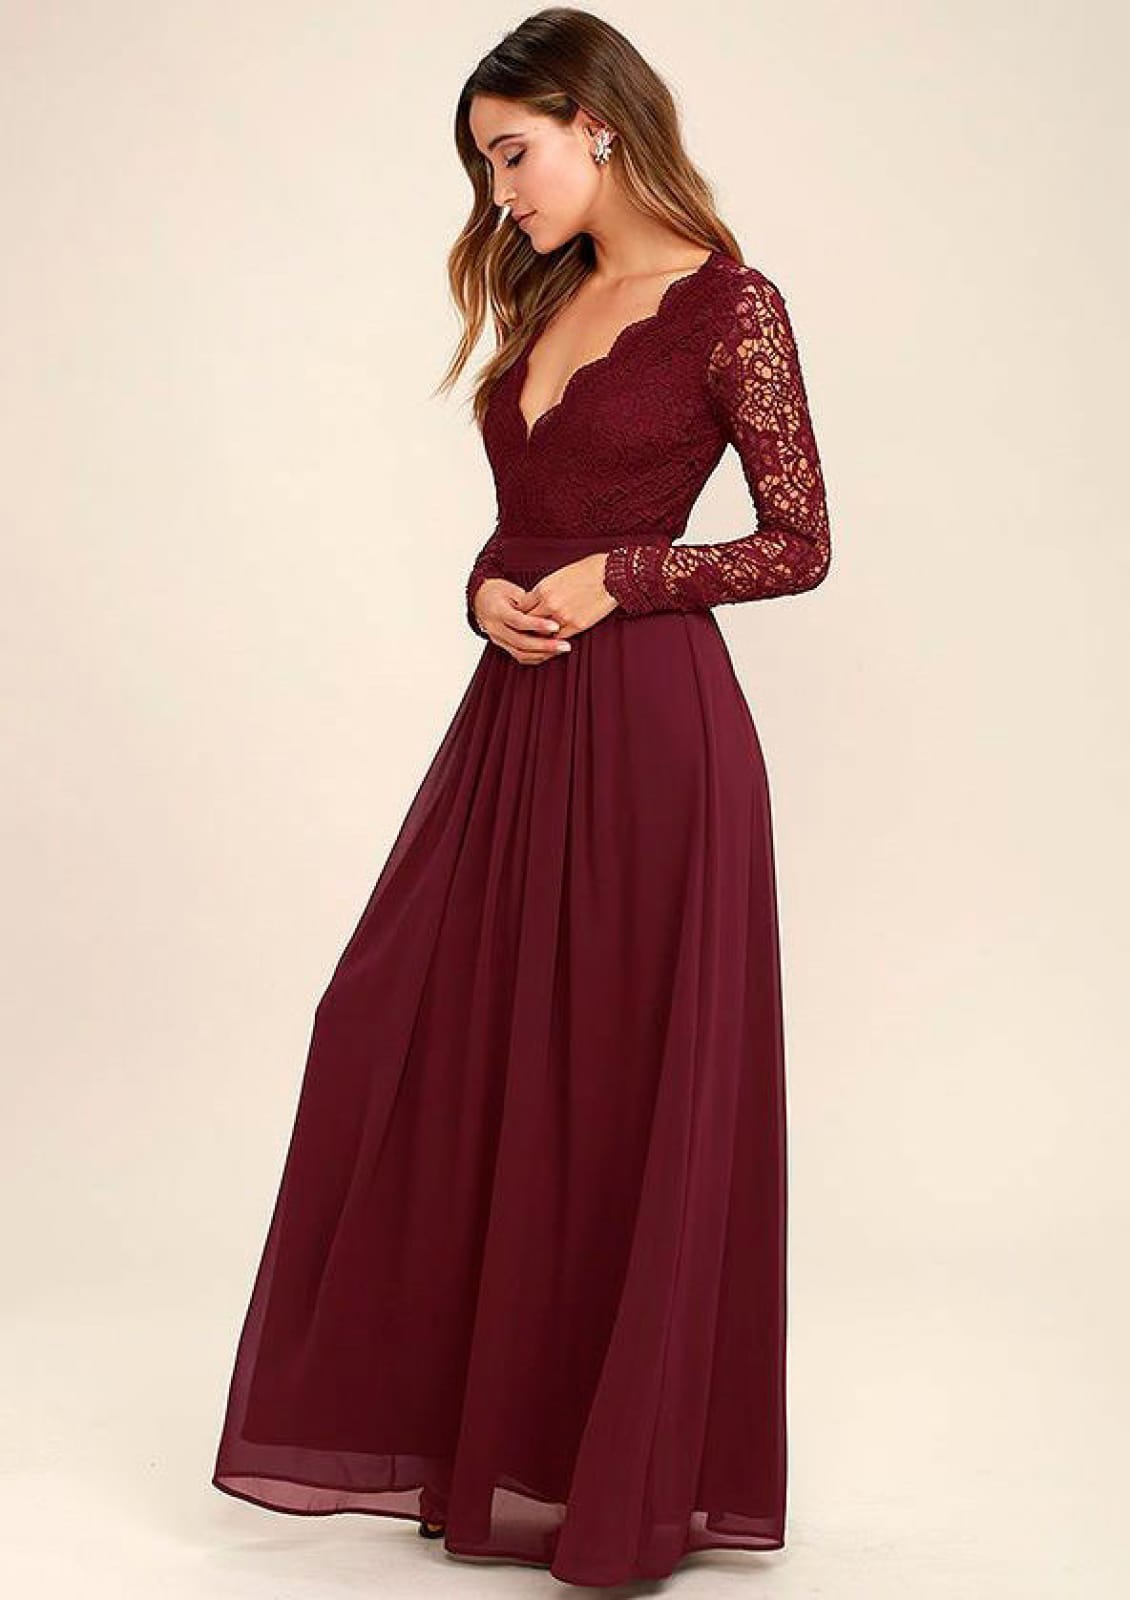 Burgundy Chiffon Long Lace Sleeve Backless Wedding Party Bridesmaid Dress